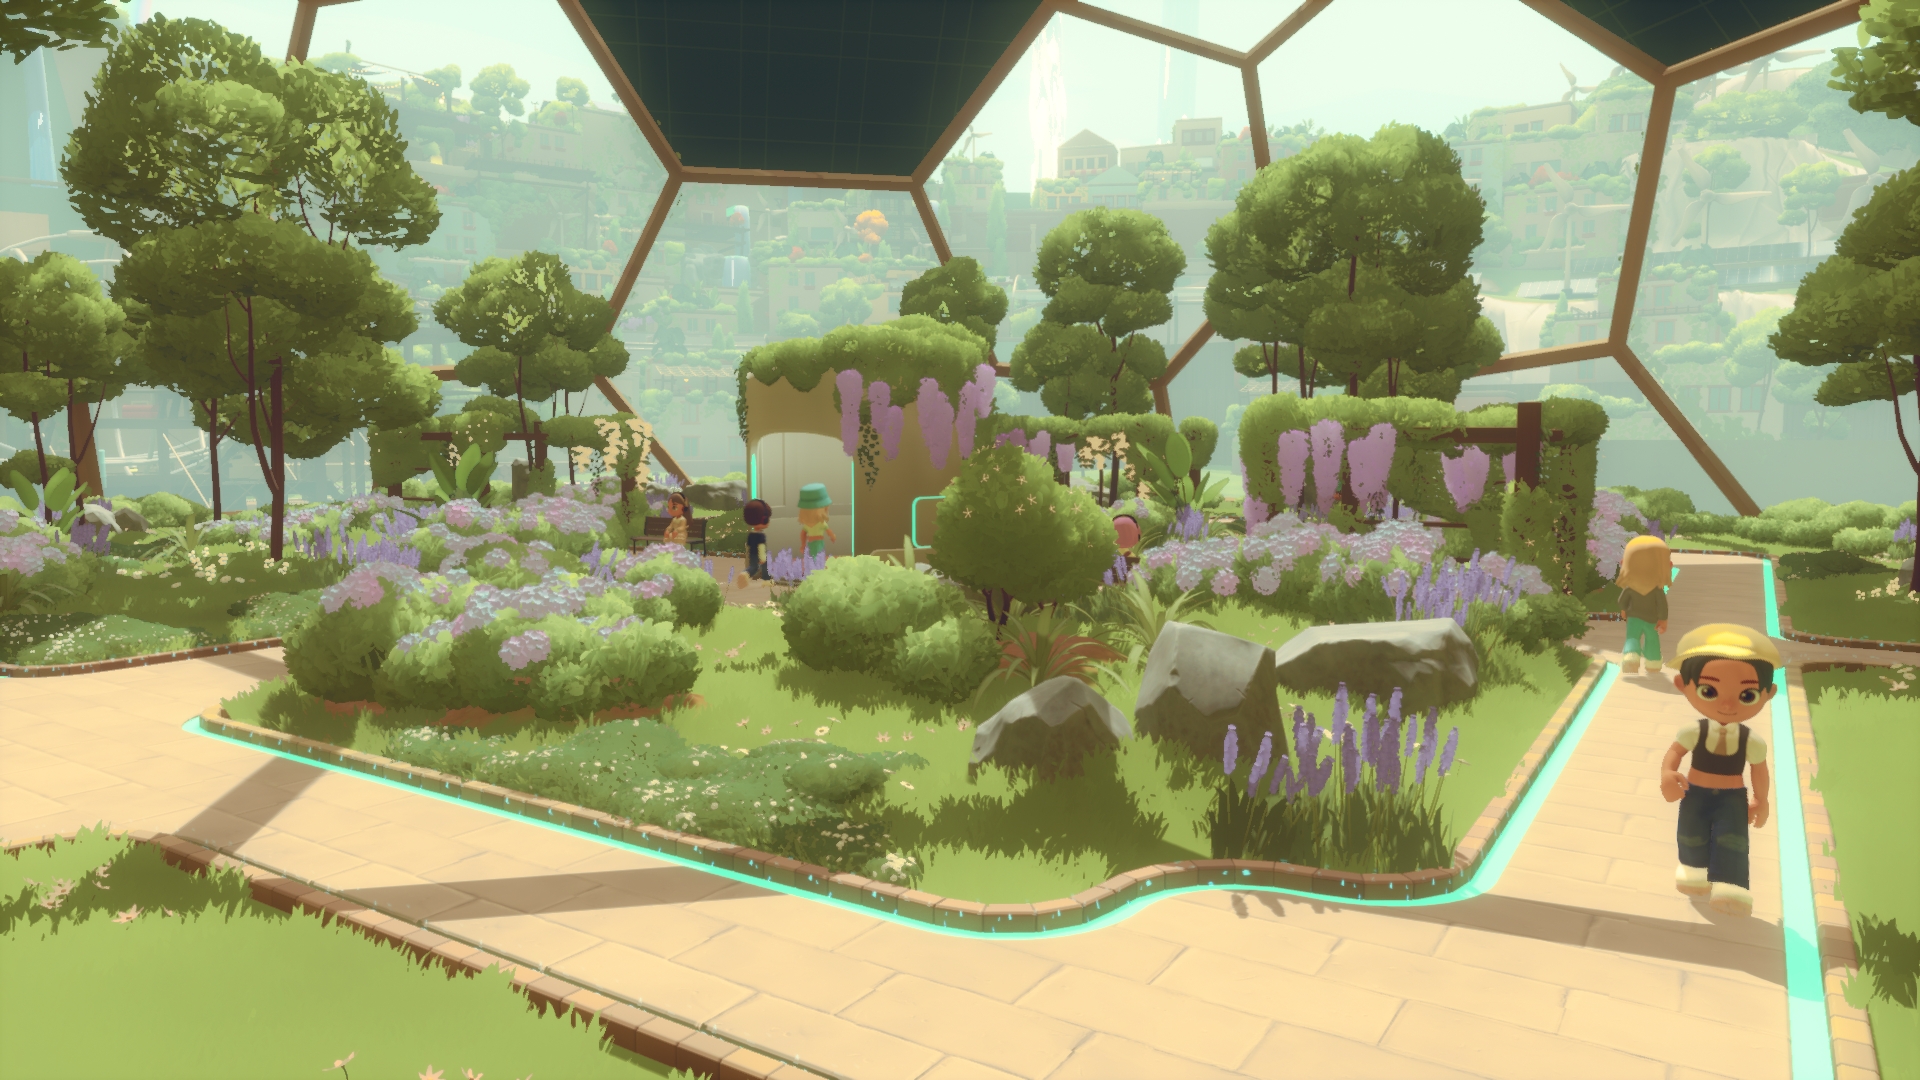 Loftia is a new solarpunk game with farming, crafting, exploring